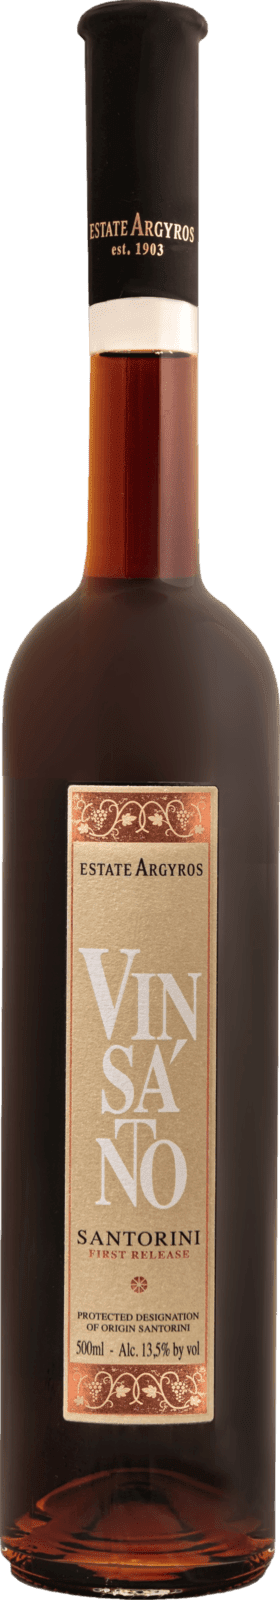 Estate Argyros Vinsanto First Release 2015